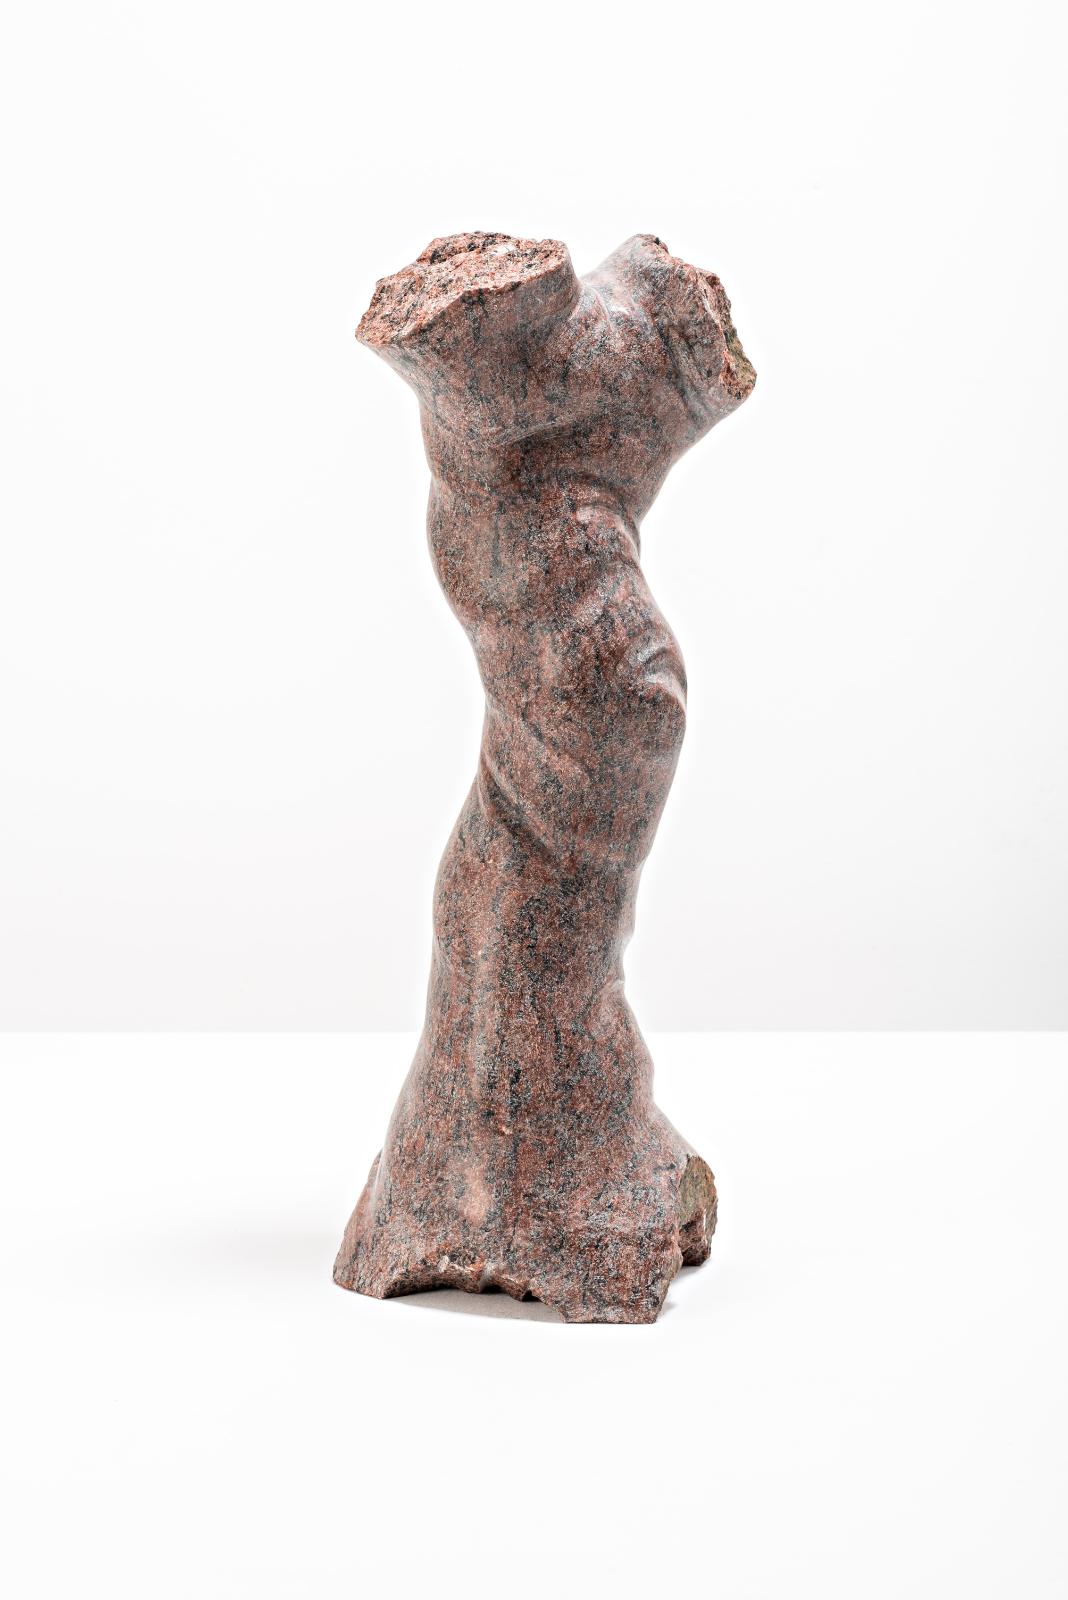 Christoph Traub, Körper, bewegt, 2018, Granit (Vanga), 45 x 15 x 16 cm, trc014ko